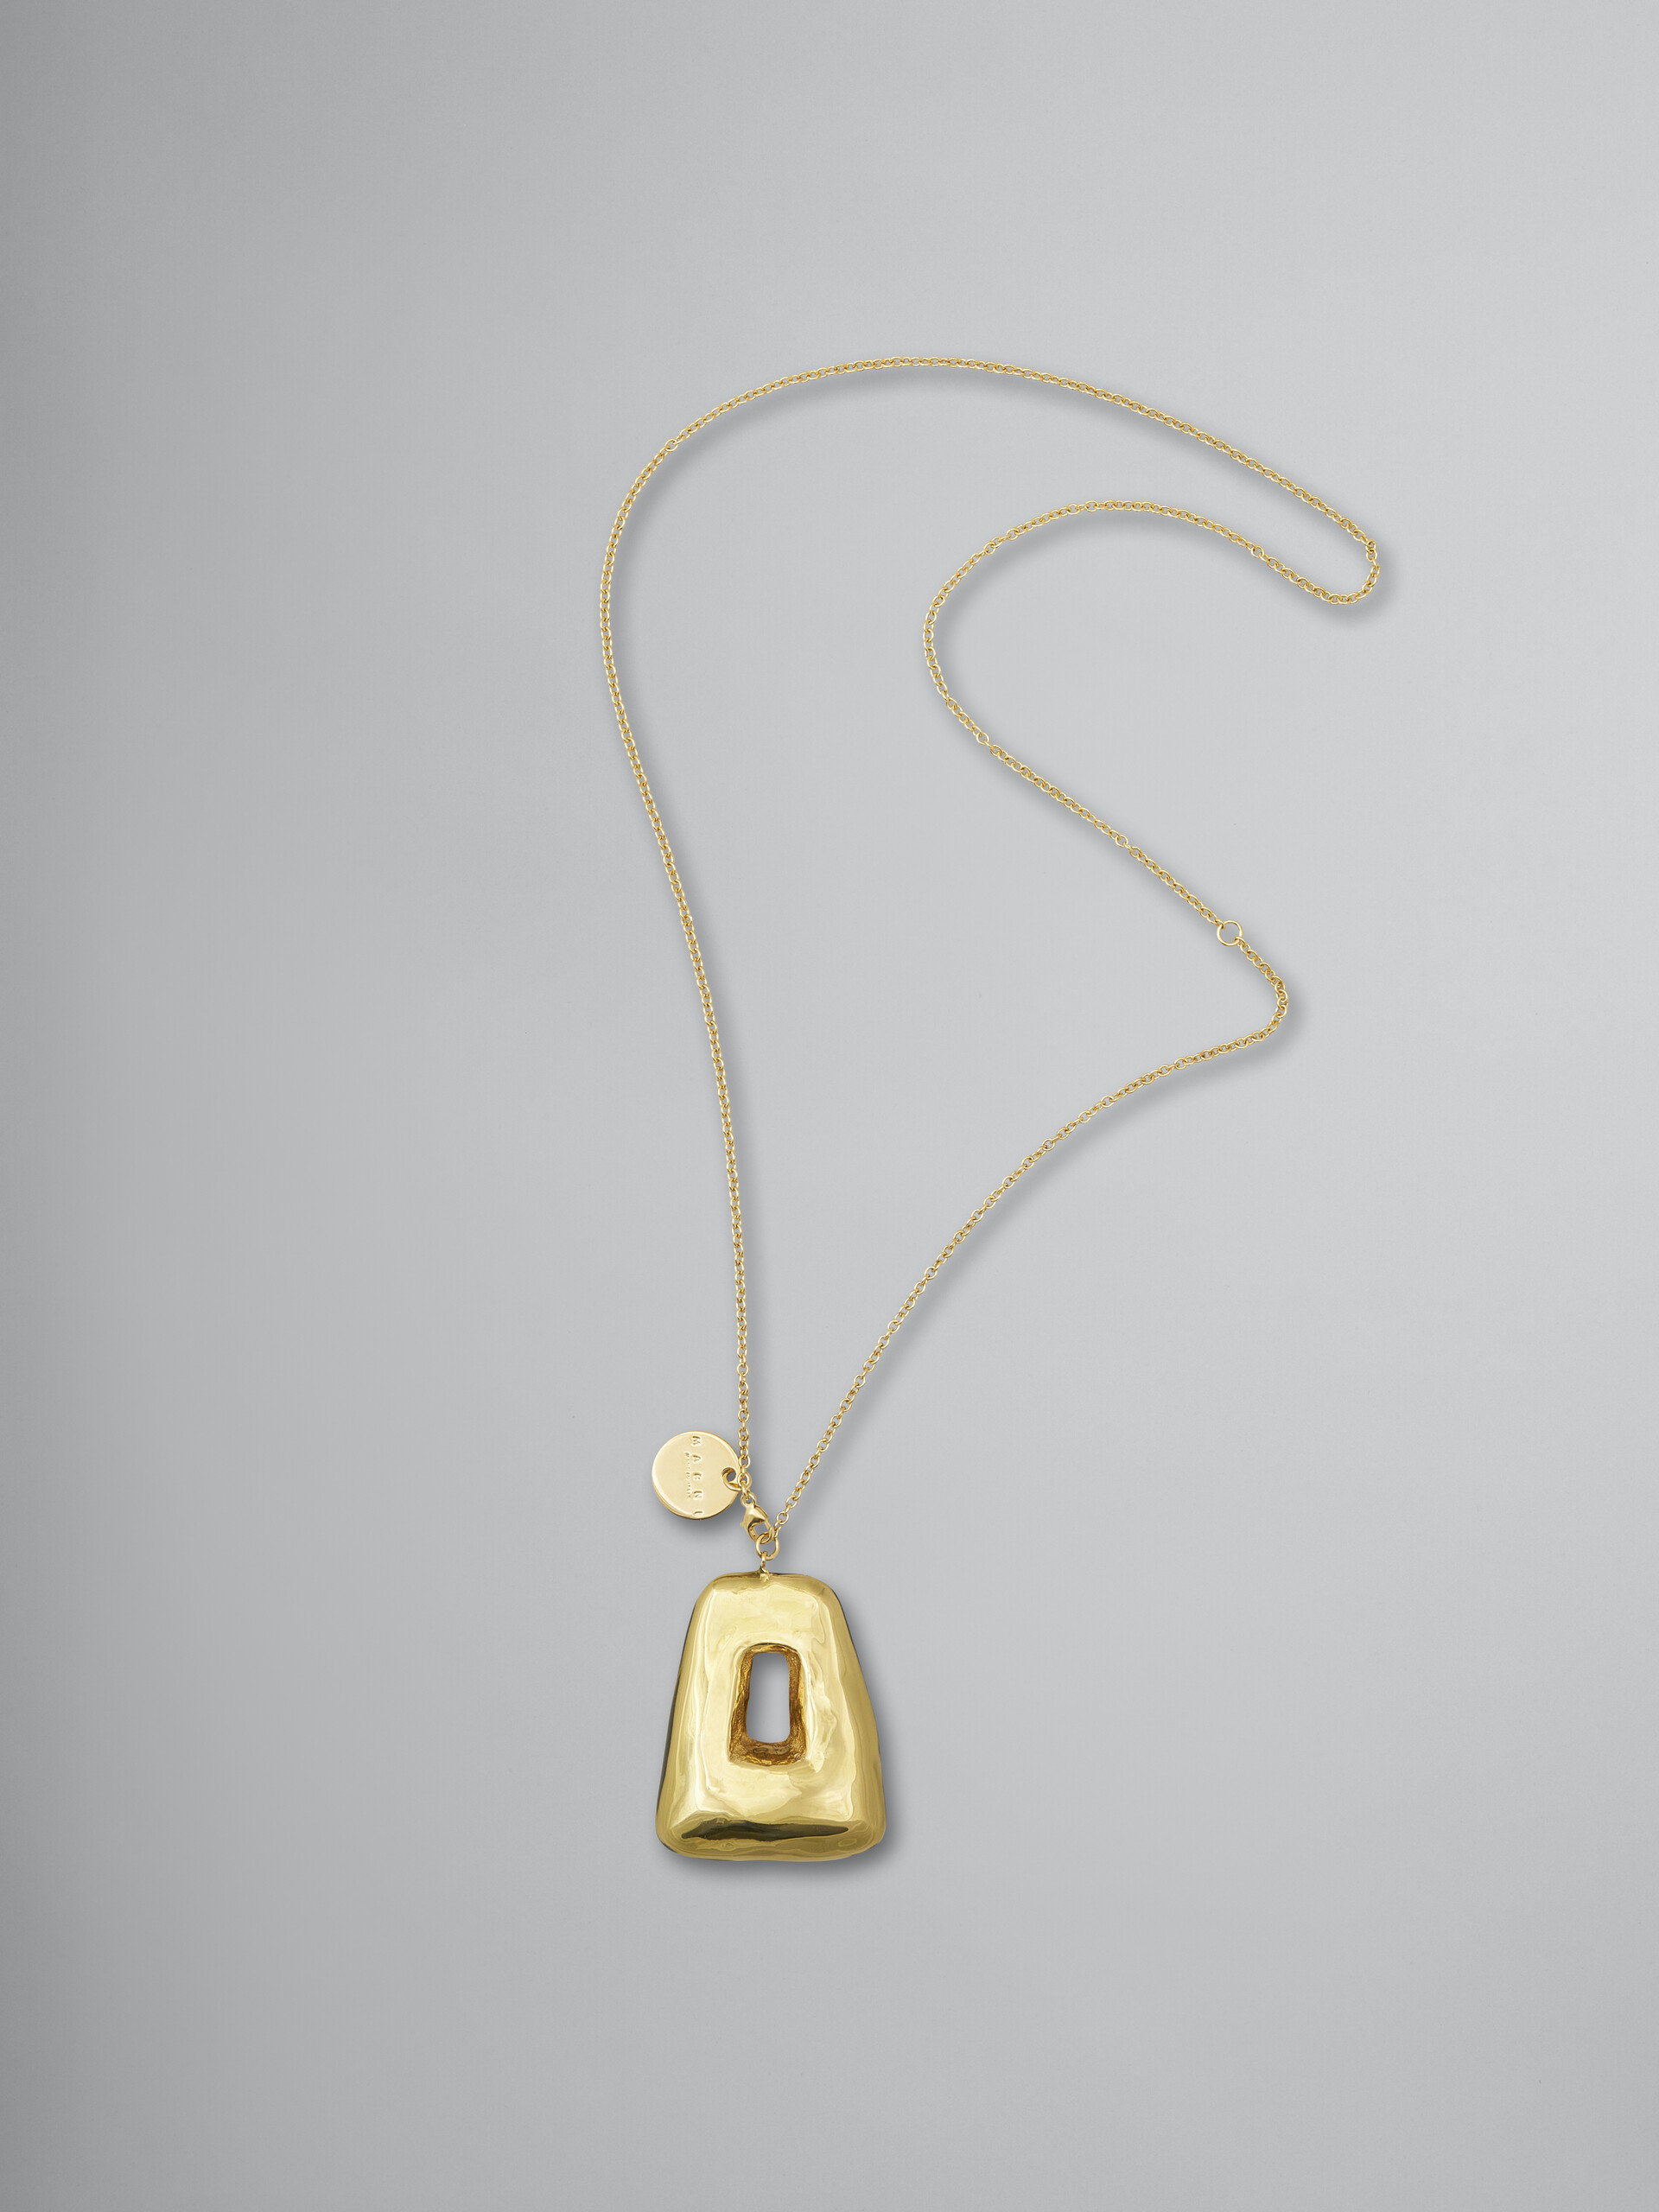 Goldfarbene TRAPEZE Metall-Halskette mit transparentem, emailliertem Anhänger - Halsketten - Image 1